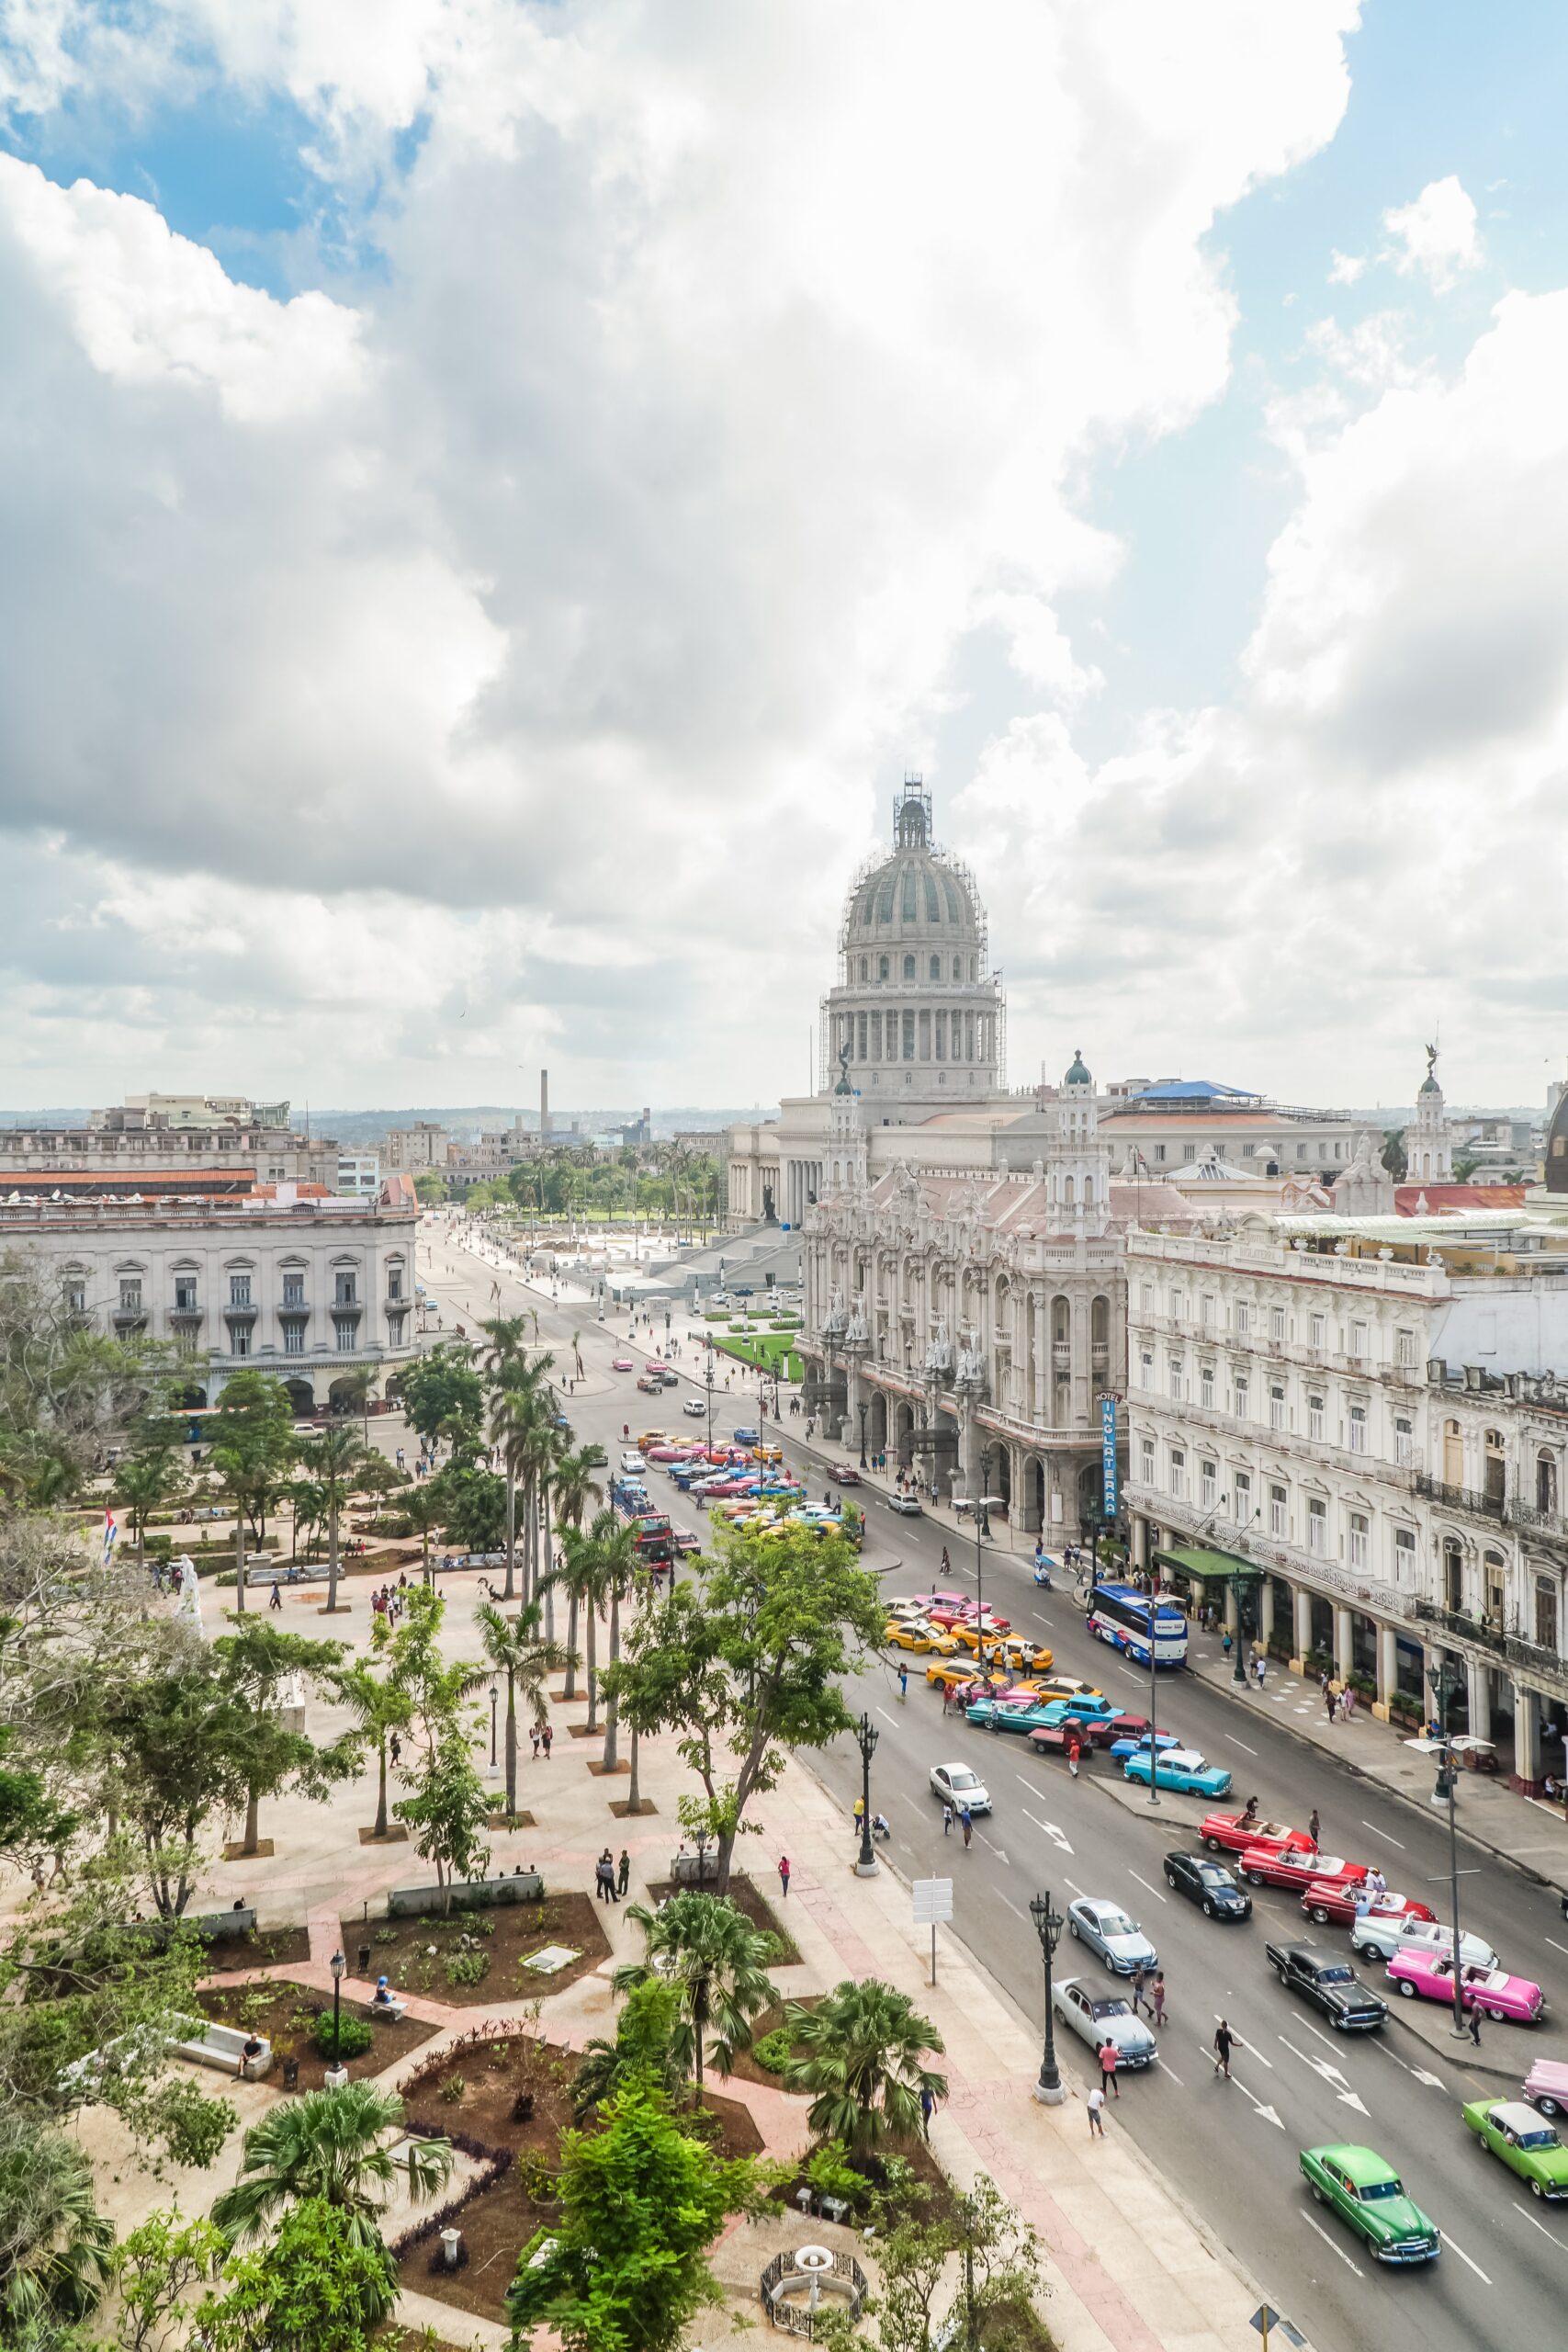 Havana, Cuba (Photo Credit: tiago claro on Unsplash)